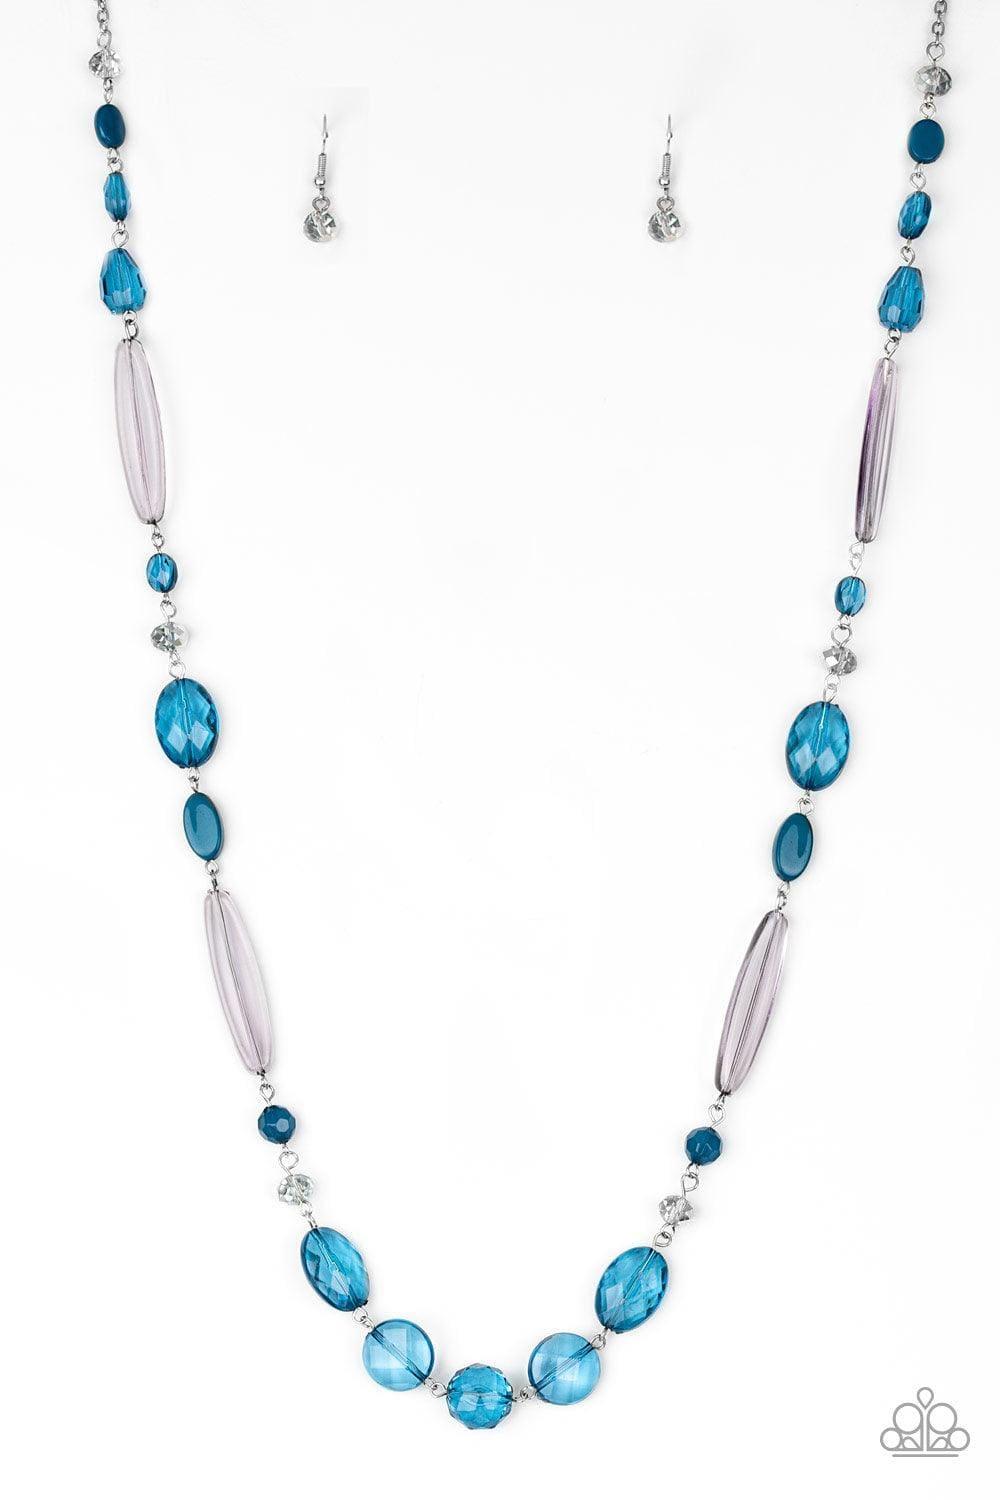 Paparazzi Accessories - Quite Quintessence - Blue Necklace - Bling by JessieK